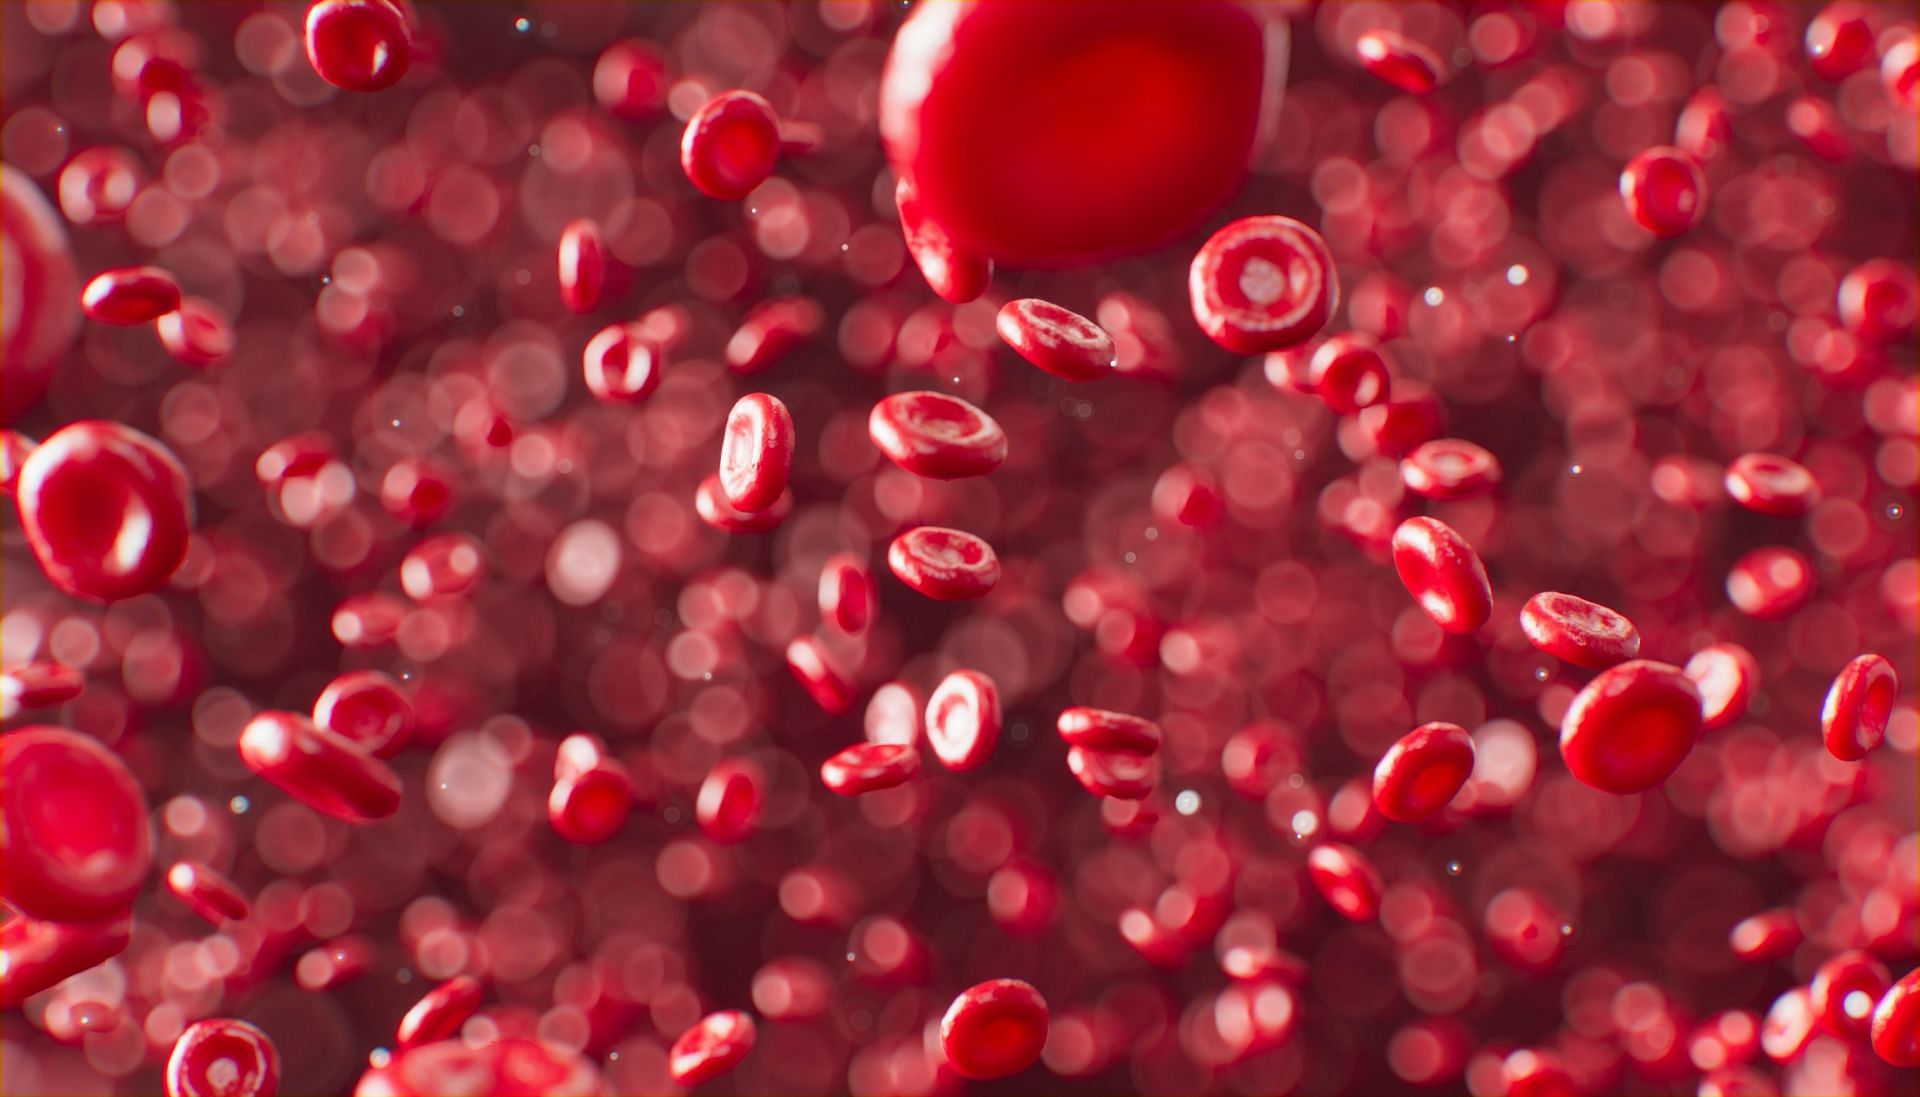 Red Blood Cells (Image via Unsplash/ANIRUDH)